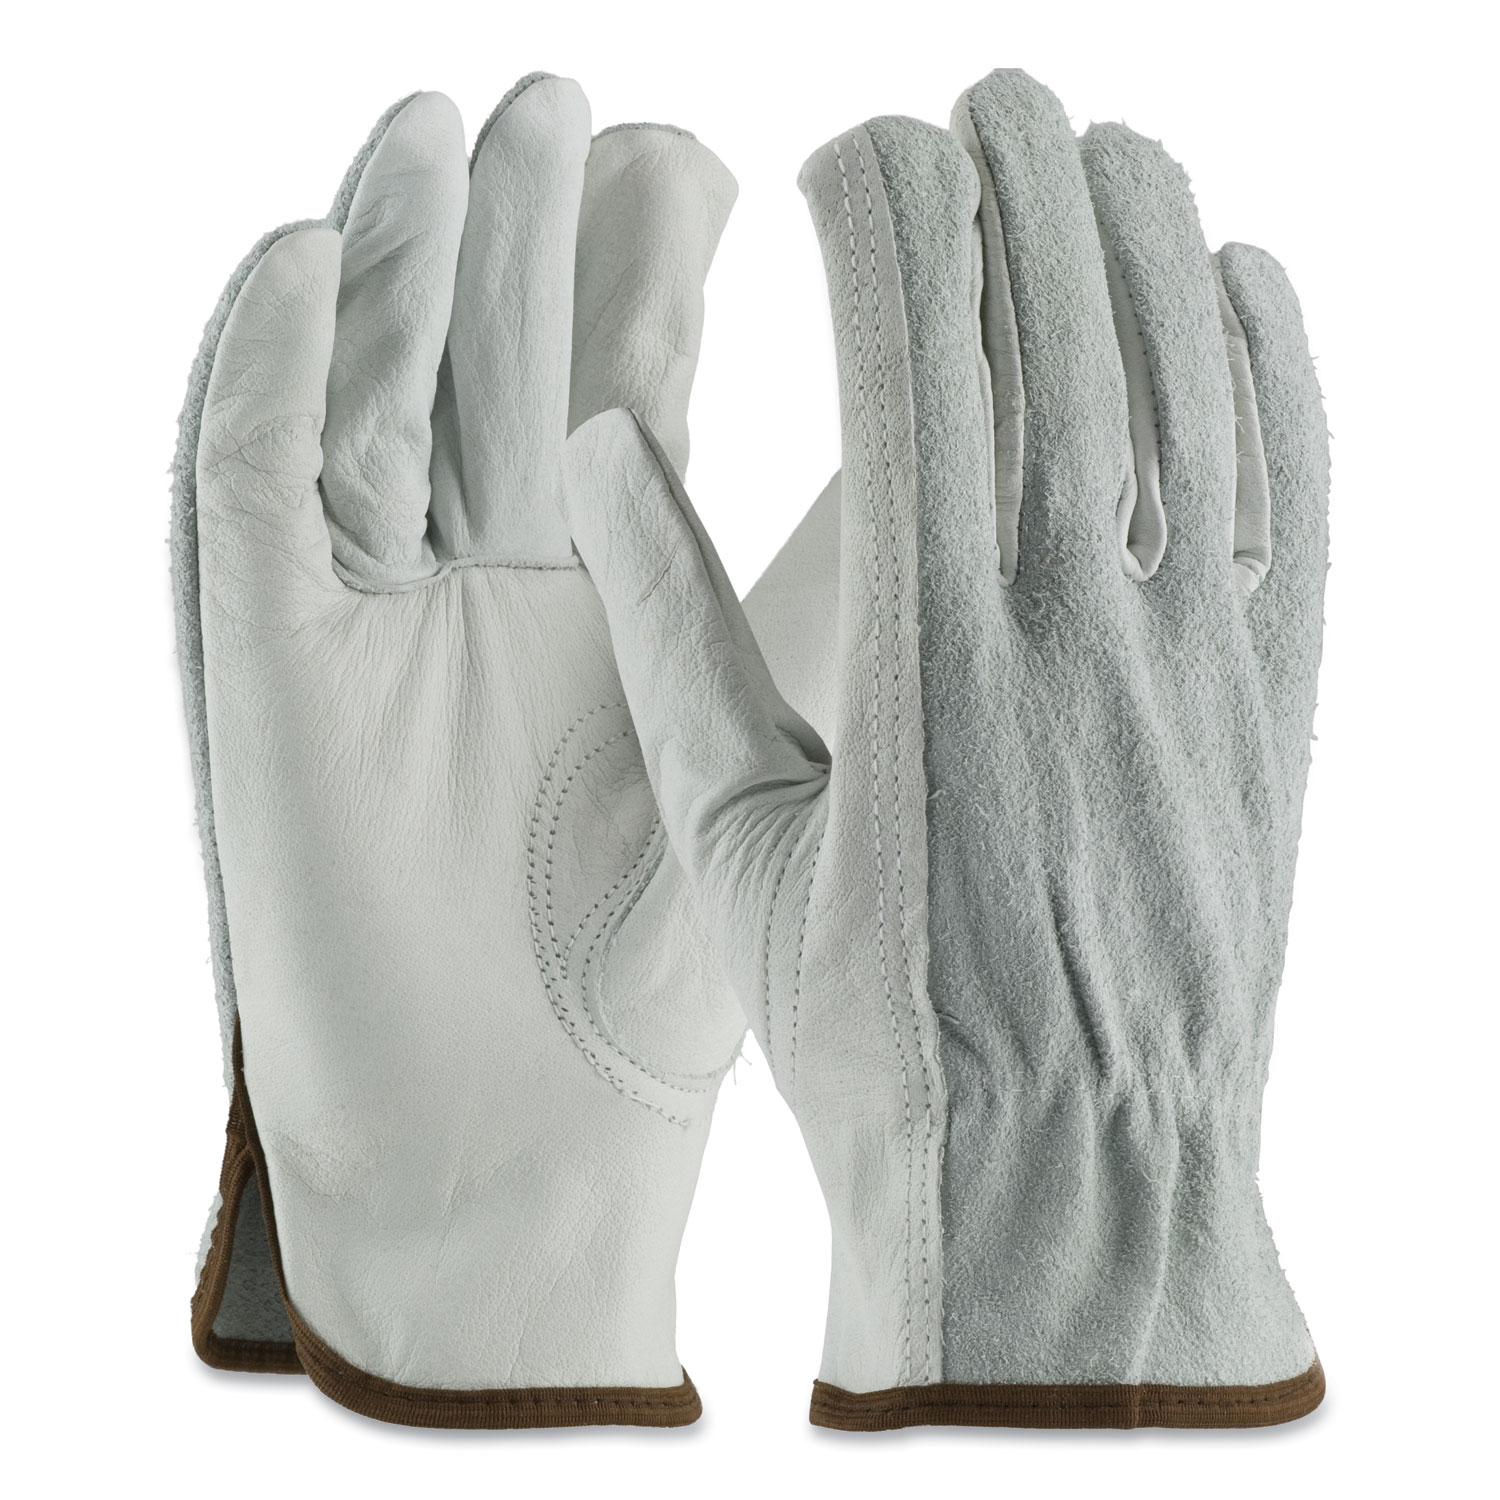  PIP 68-161SB/L Top-Grain Cowhide Leather Work Gloves, Regular Grade, Large, Gray (PID179955) 